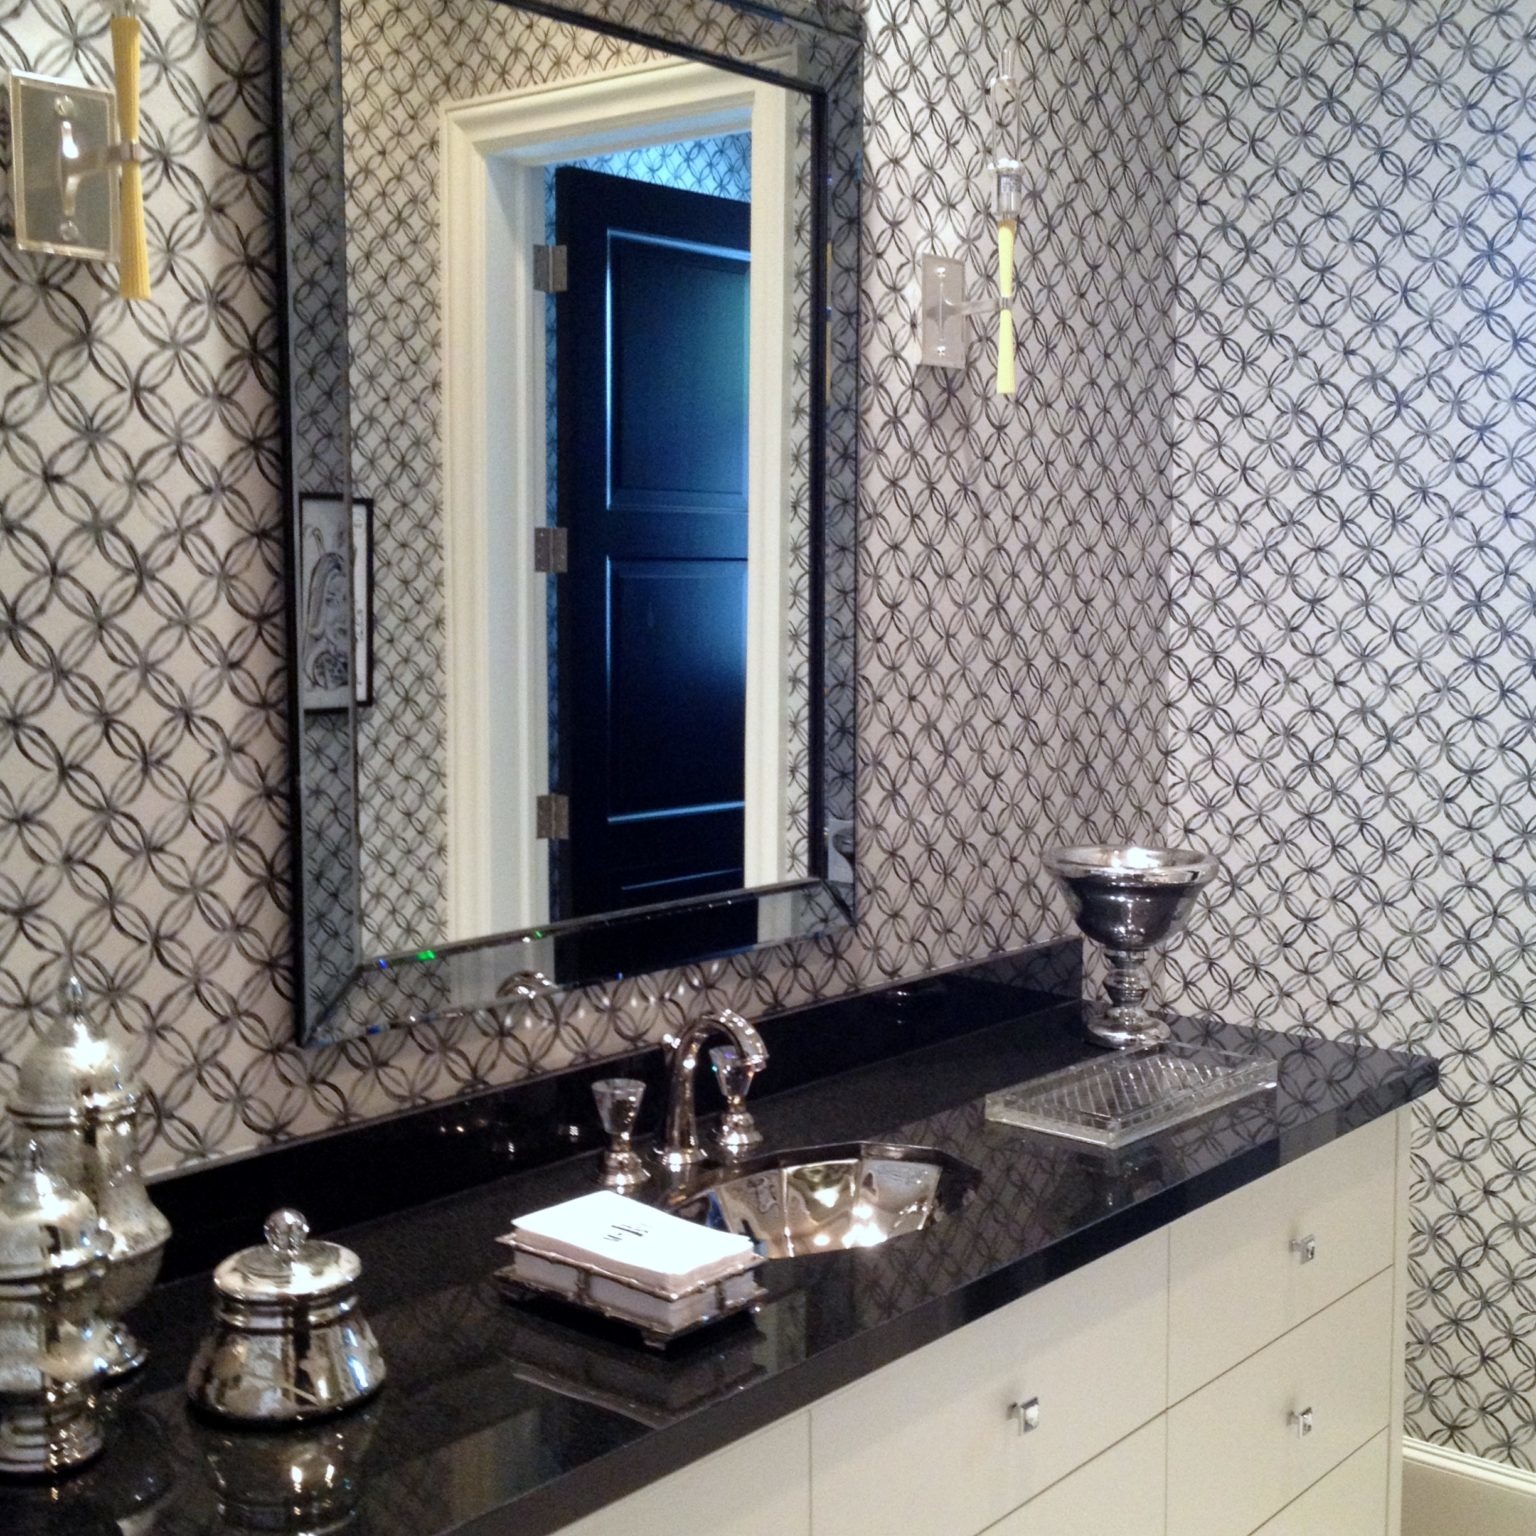 Decorative black and white bathroom interior design